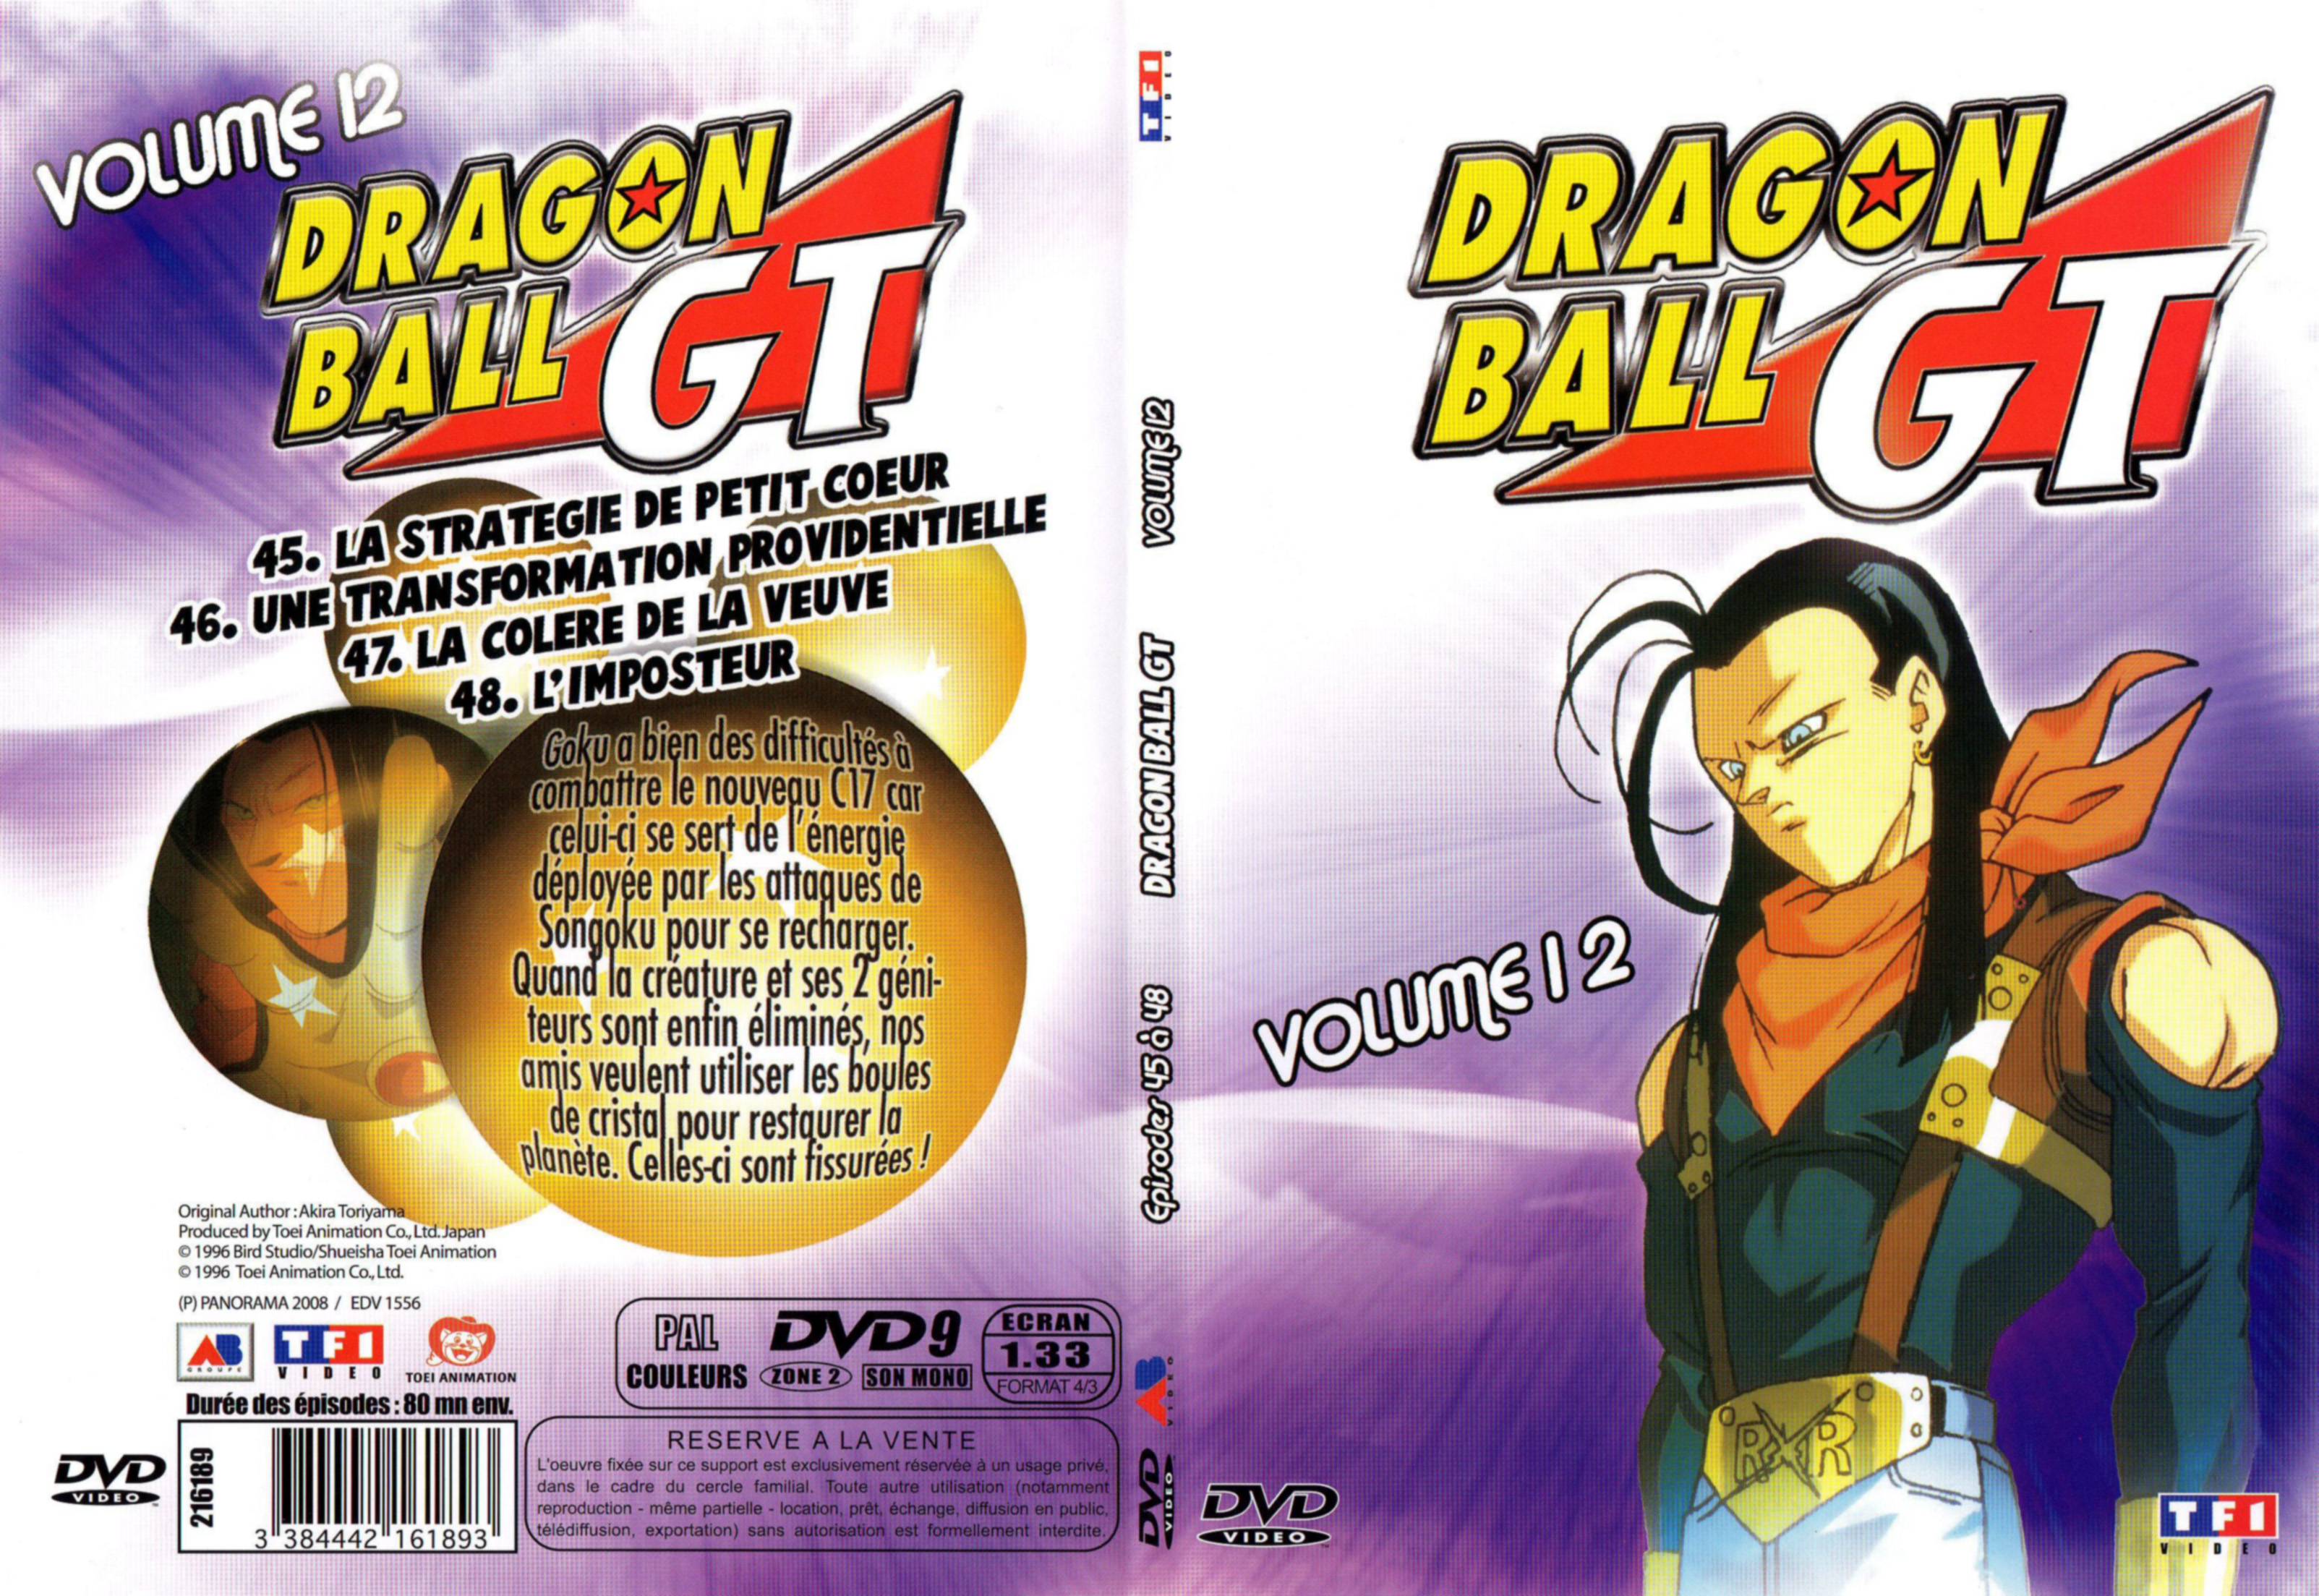 Jaquette DVD Dragon ball GT vol 12